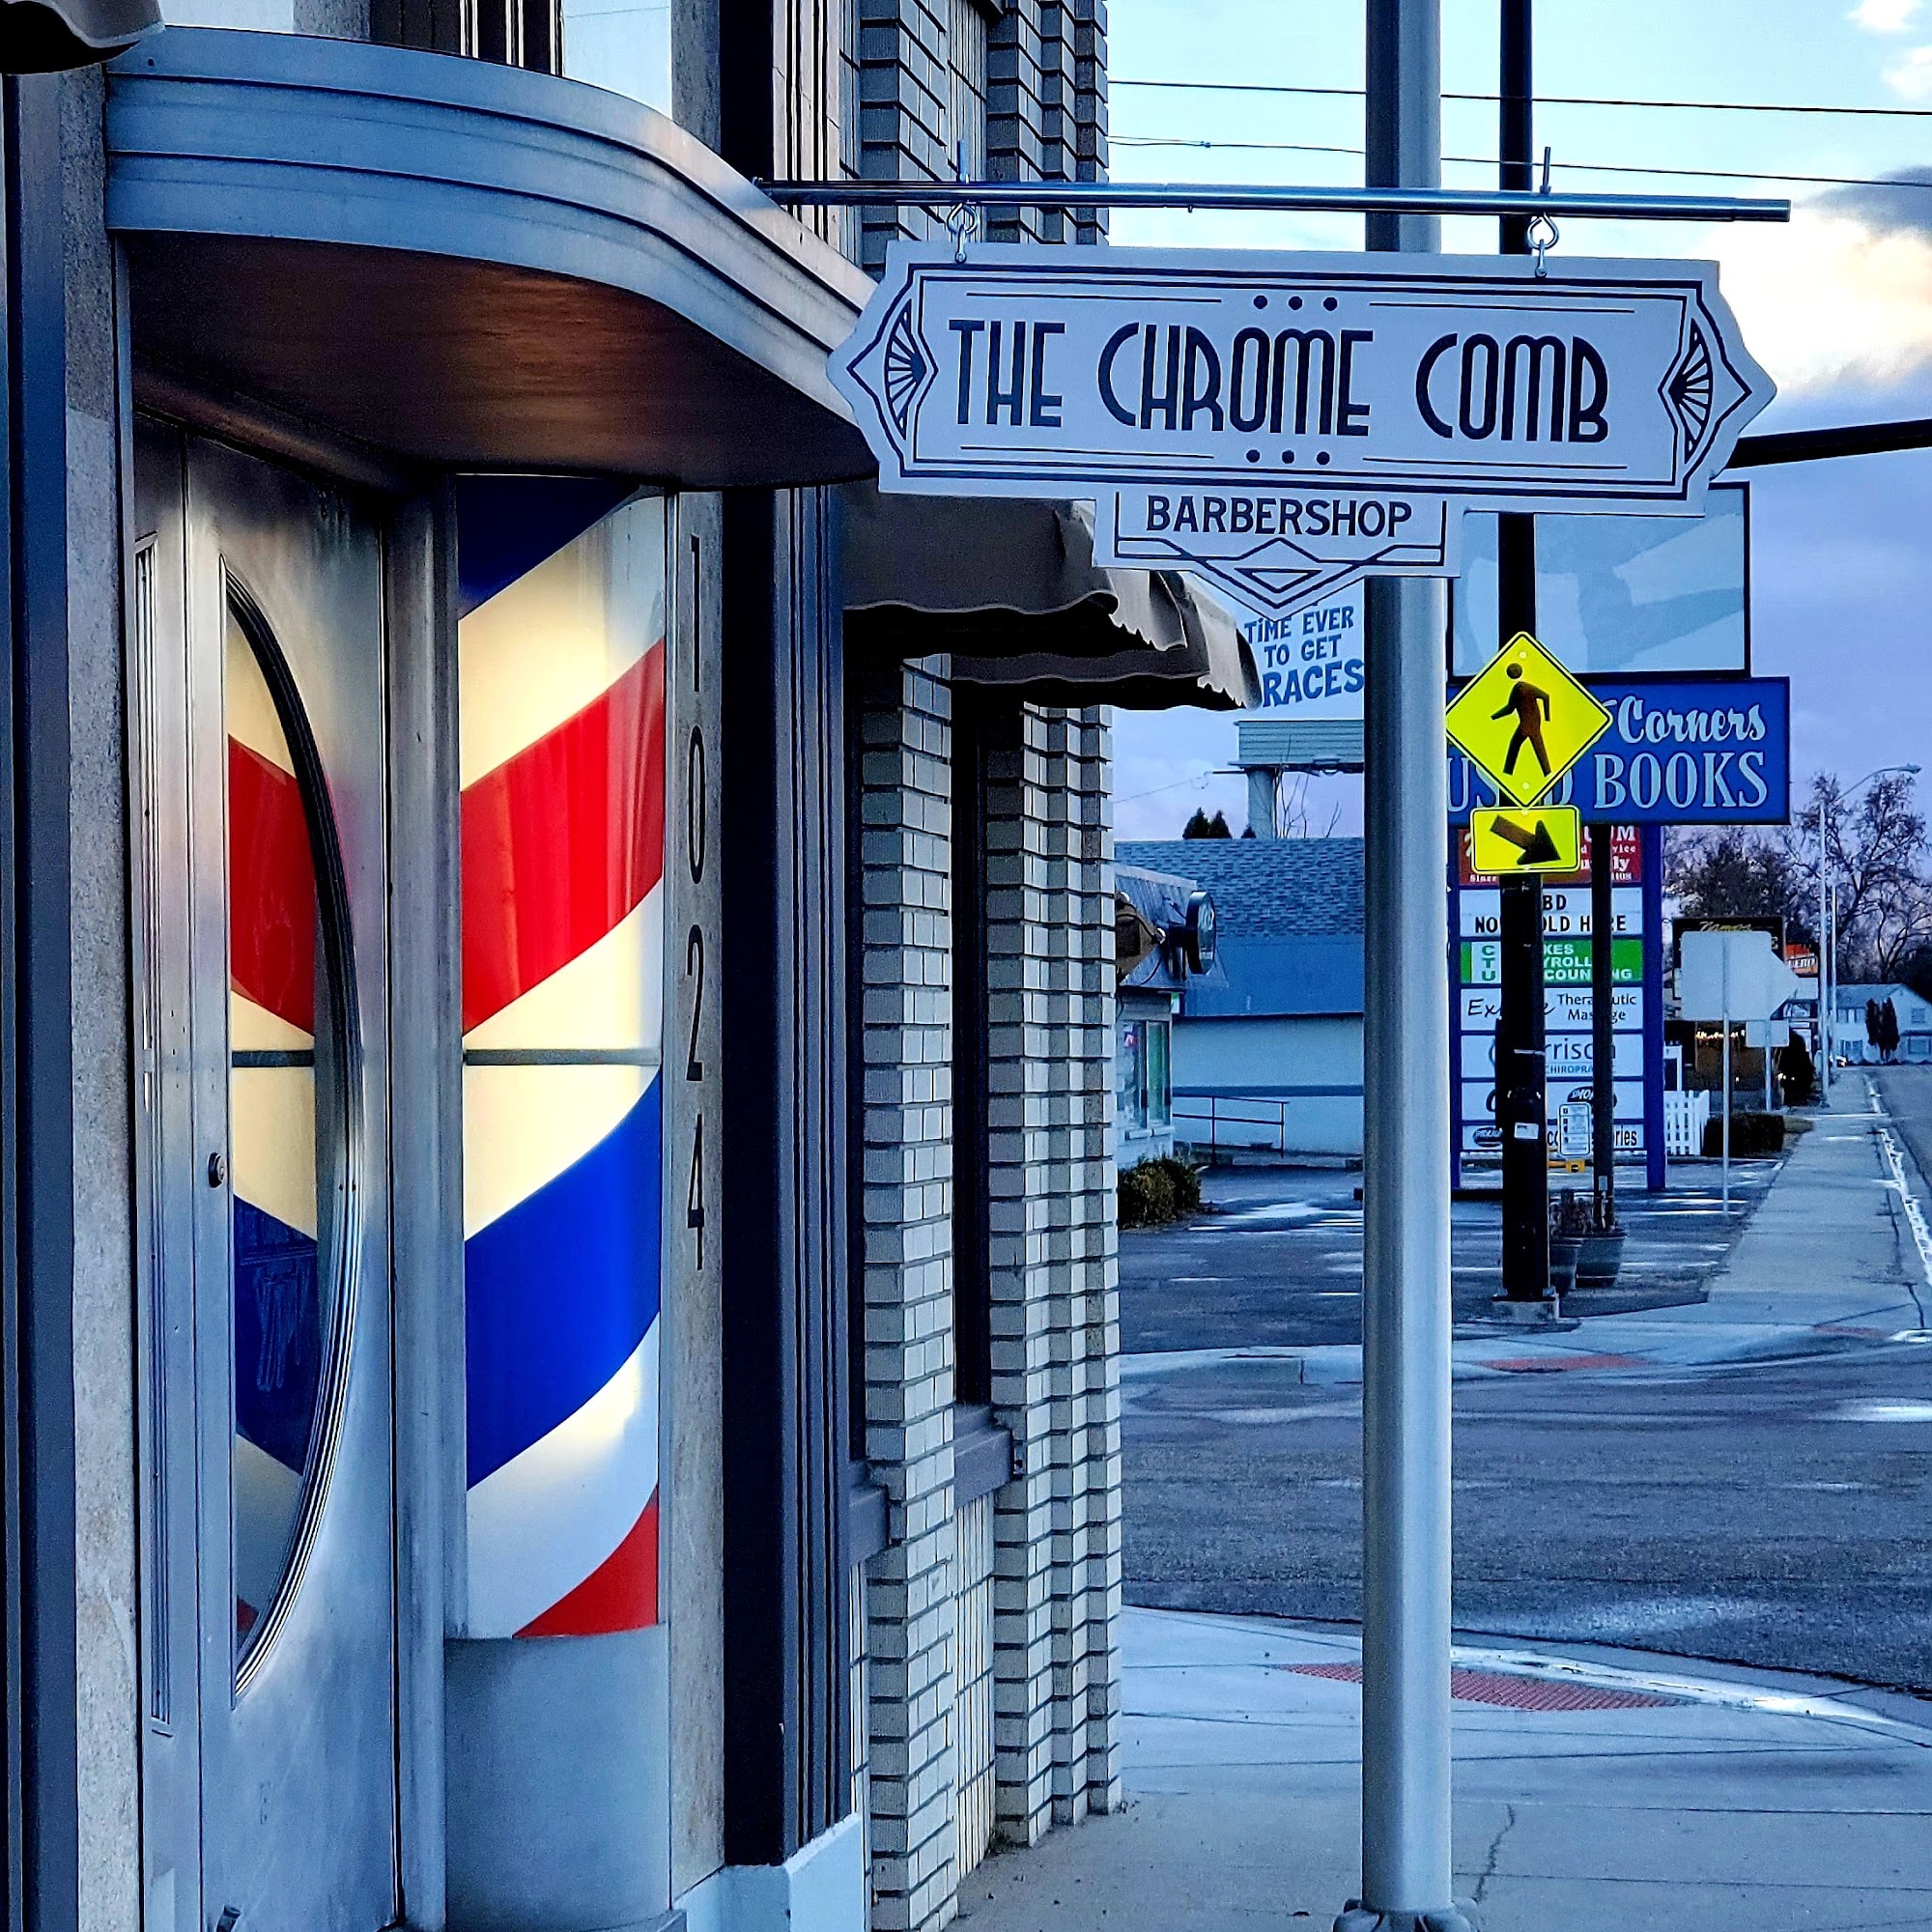 Chrome Comb Barbershop